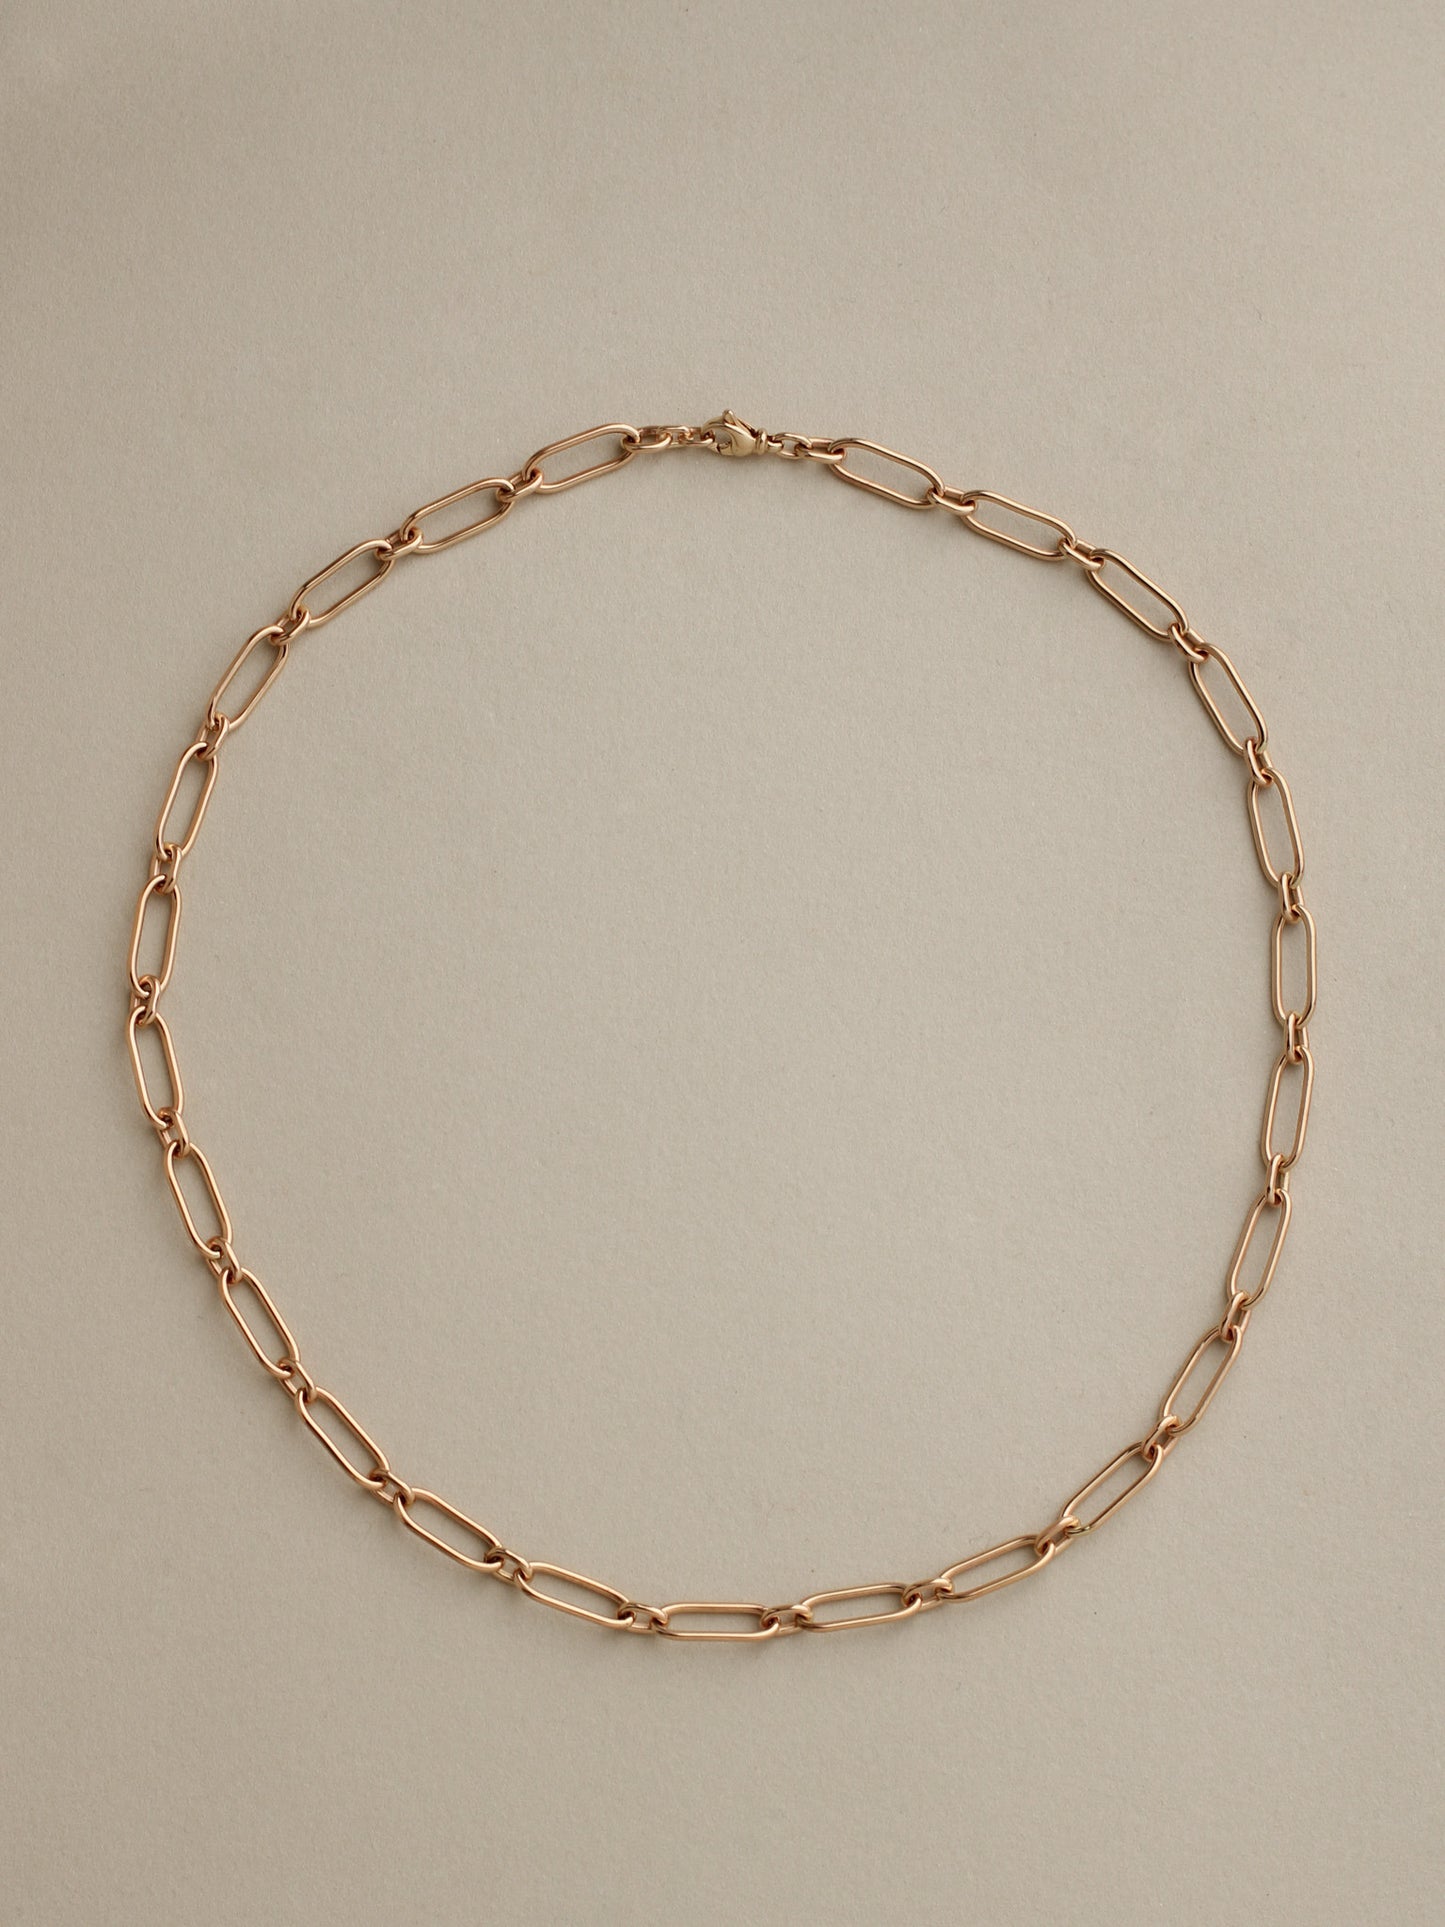 Long & Short Chain Necklace